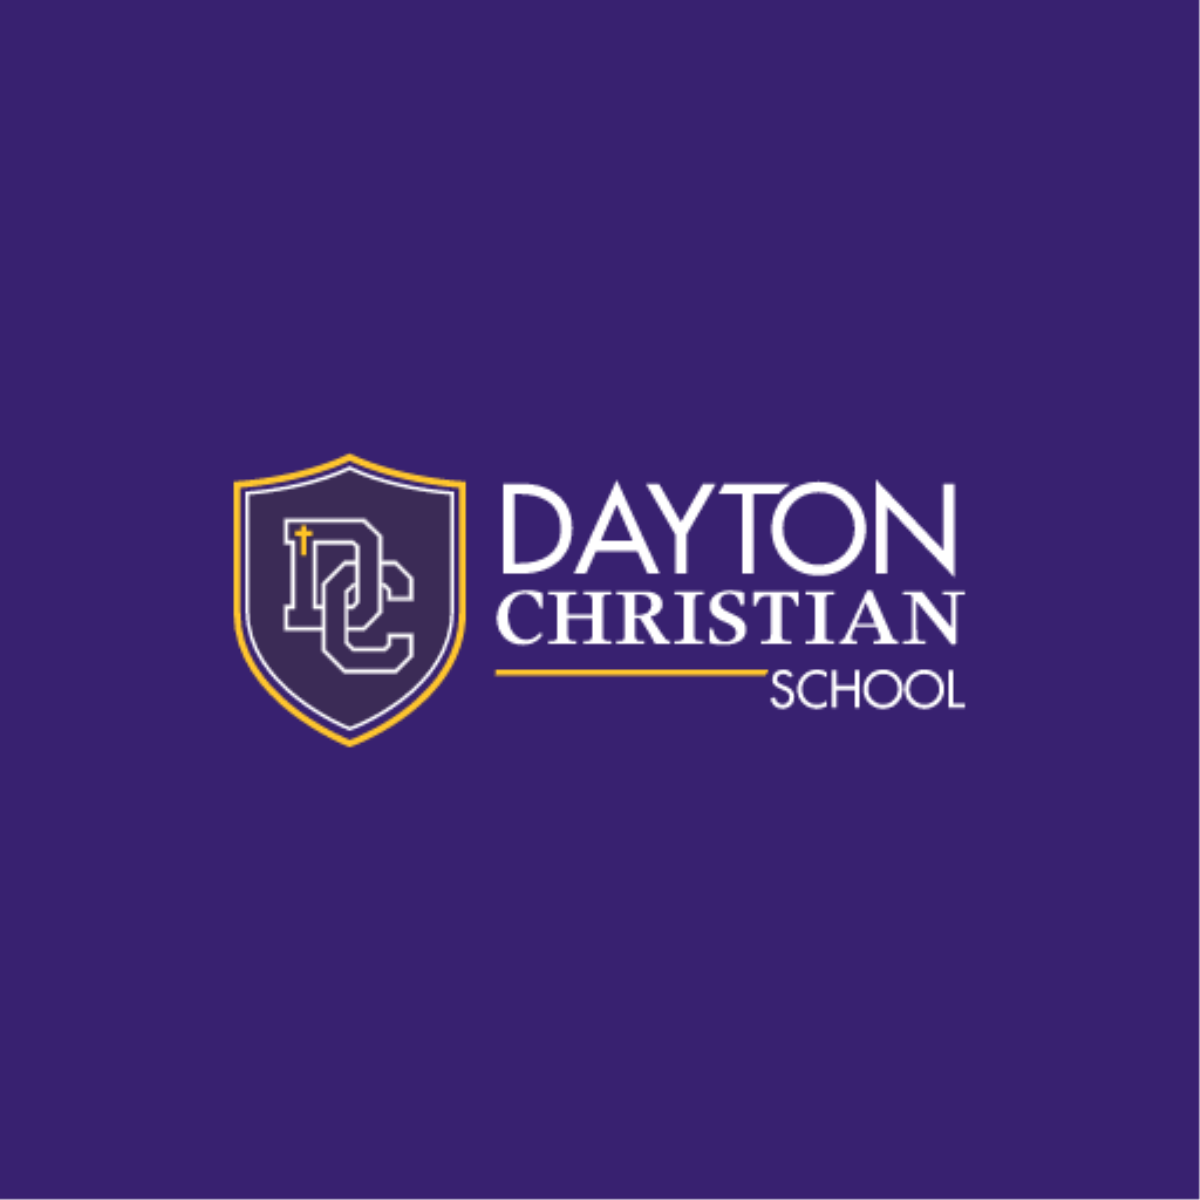 tuition-and-affordability-dayton-christian-school